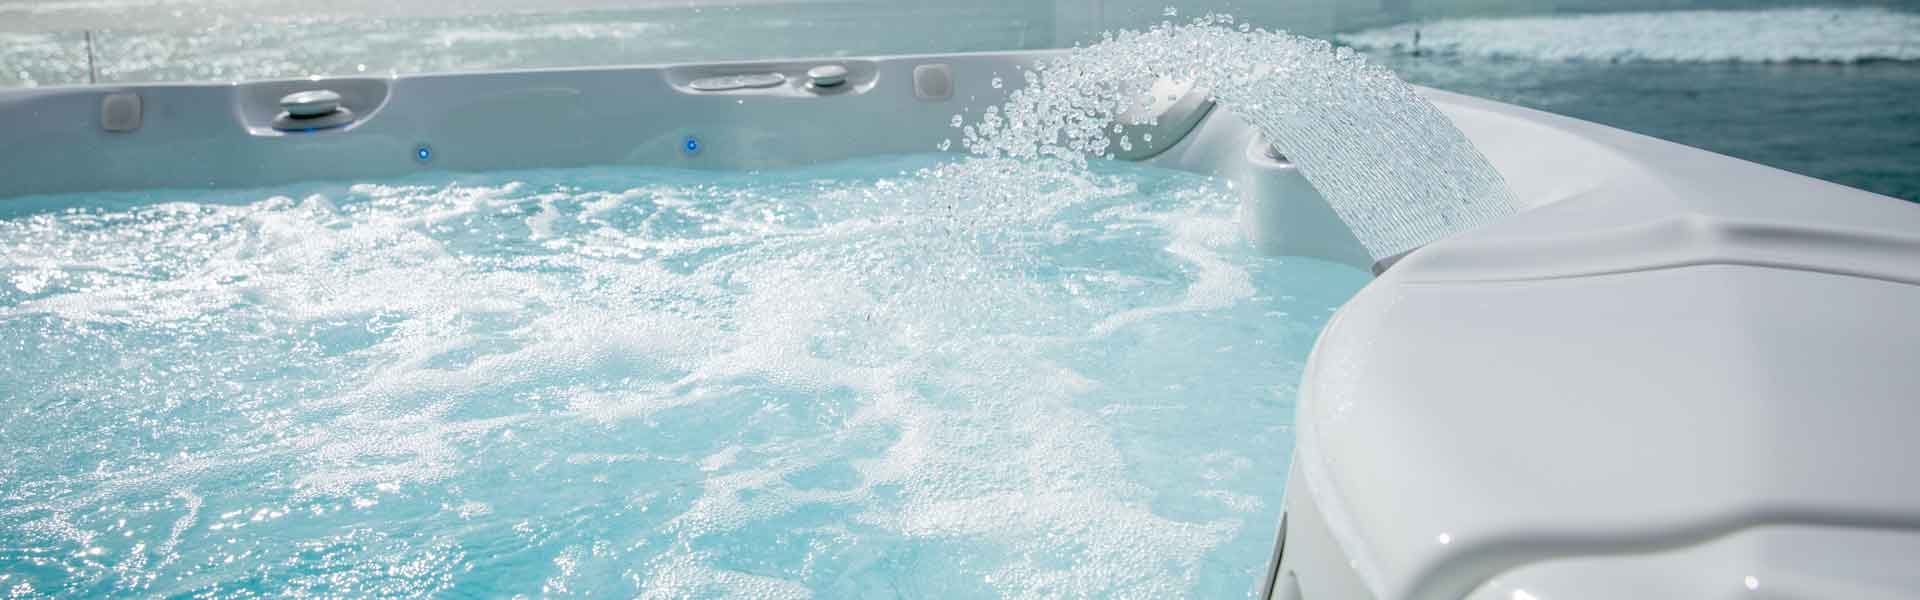 Innovative Salt Water Hot Tub Systems vs Traditional Chlorine